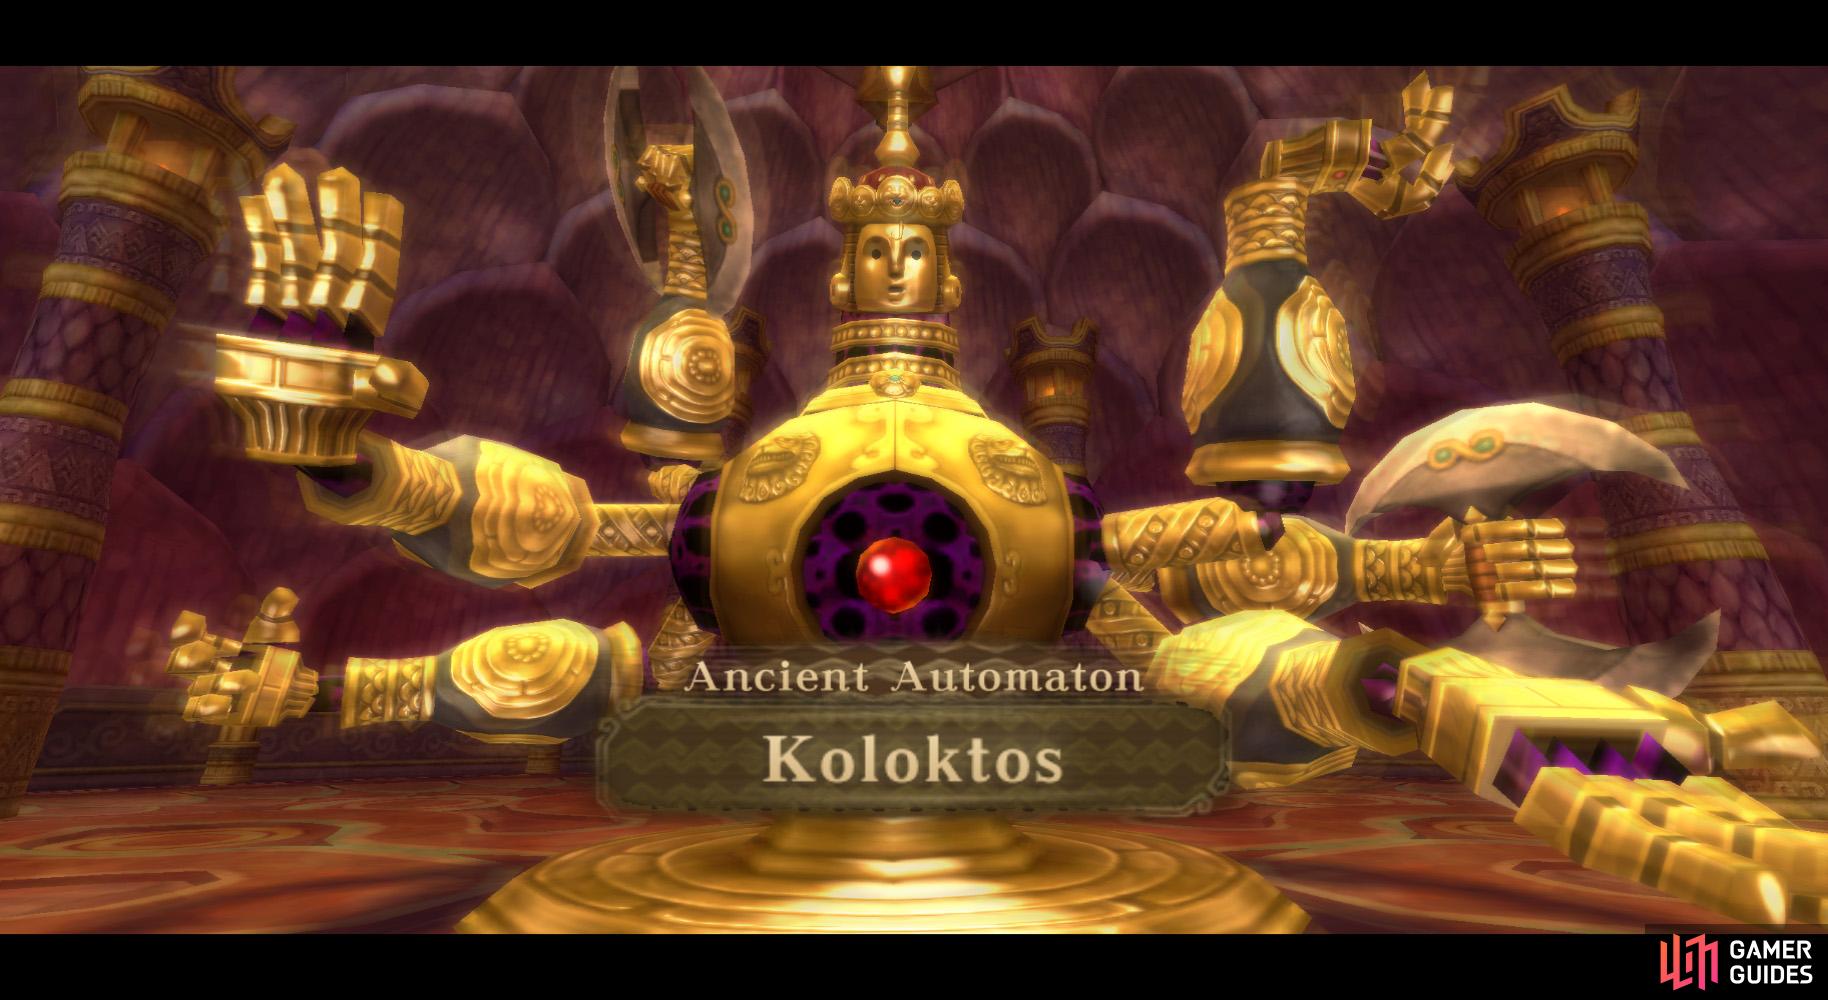 Koloktos has 6 arms–and isn't afraid to use 'em!